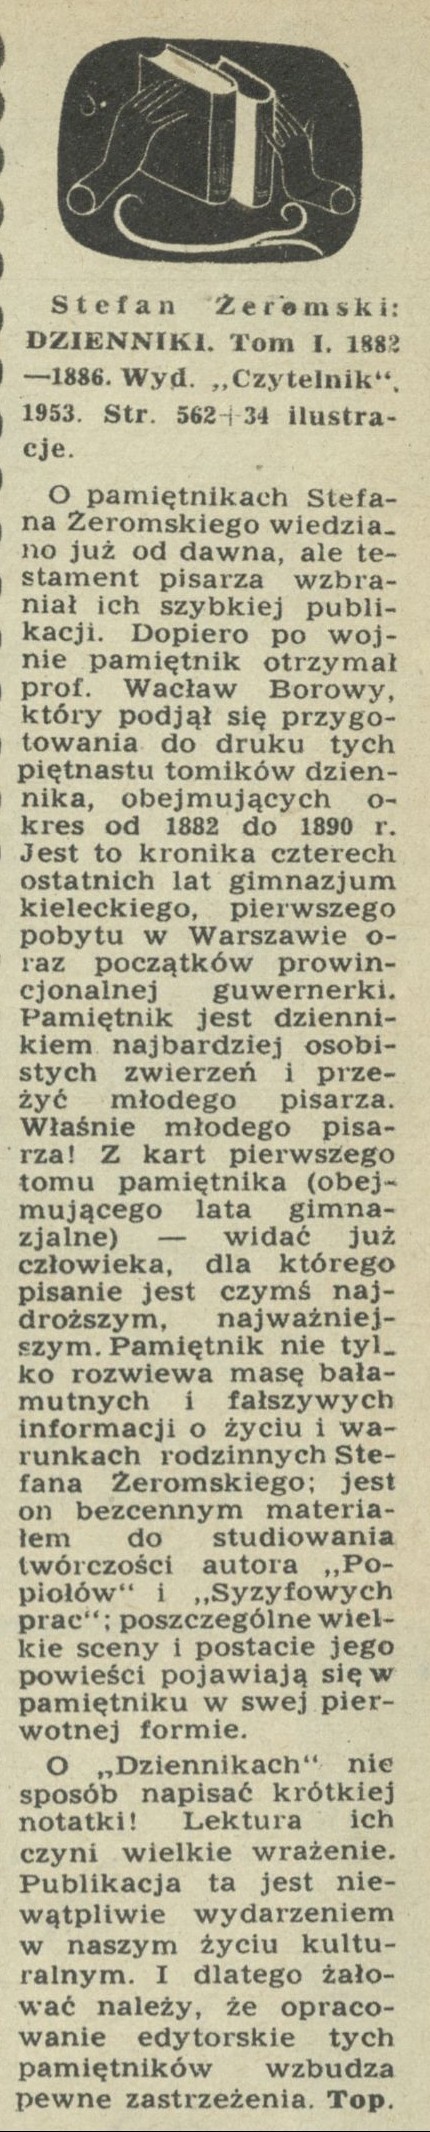 Stefan Żeromski "Dzienniki"